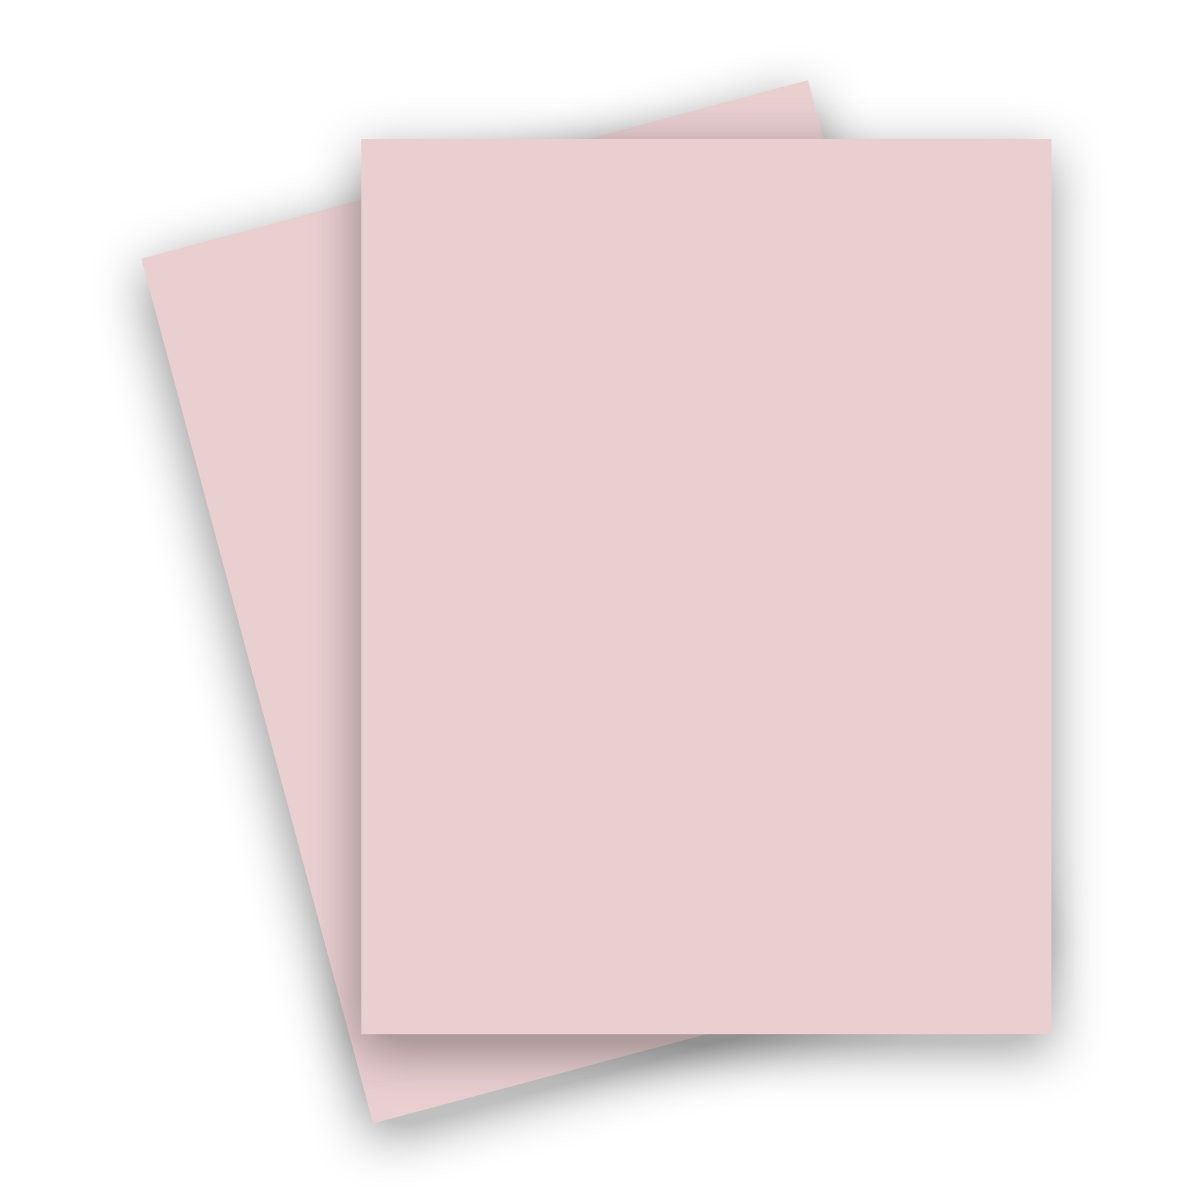 Burano Sky Blue (08) - 8.5X11 Cardstock Paper - 92Lb Cover